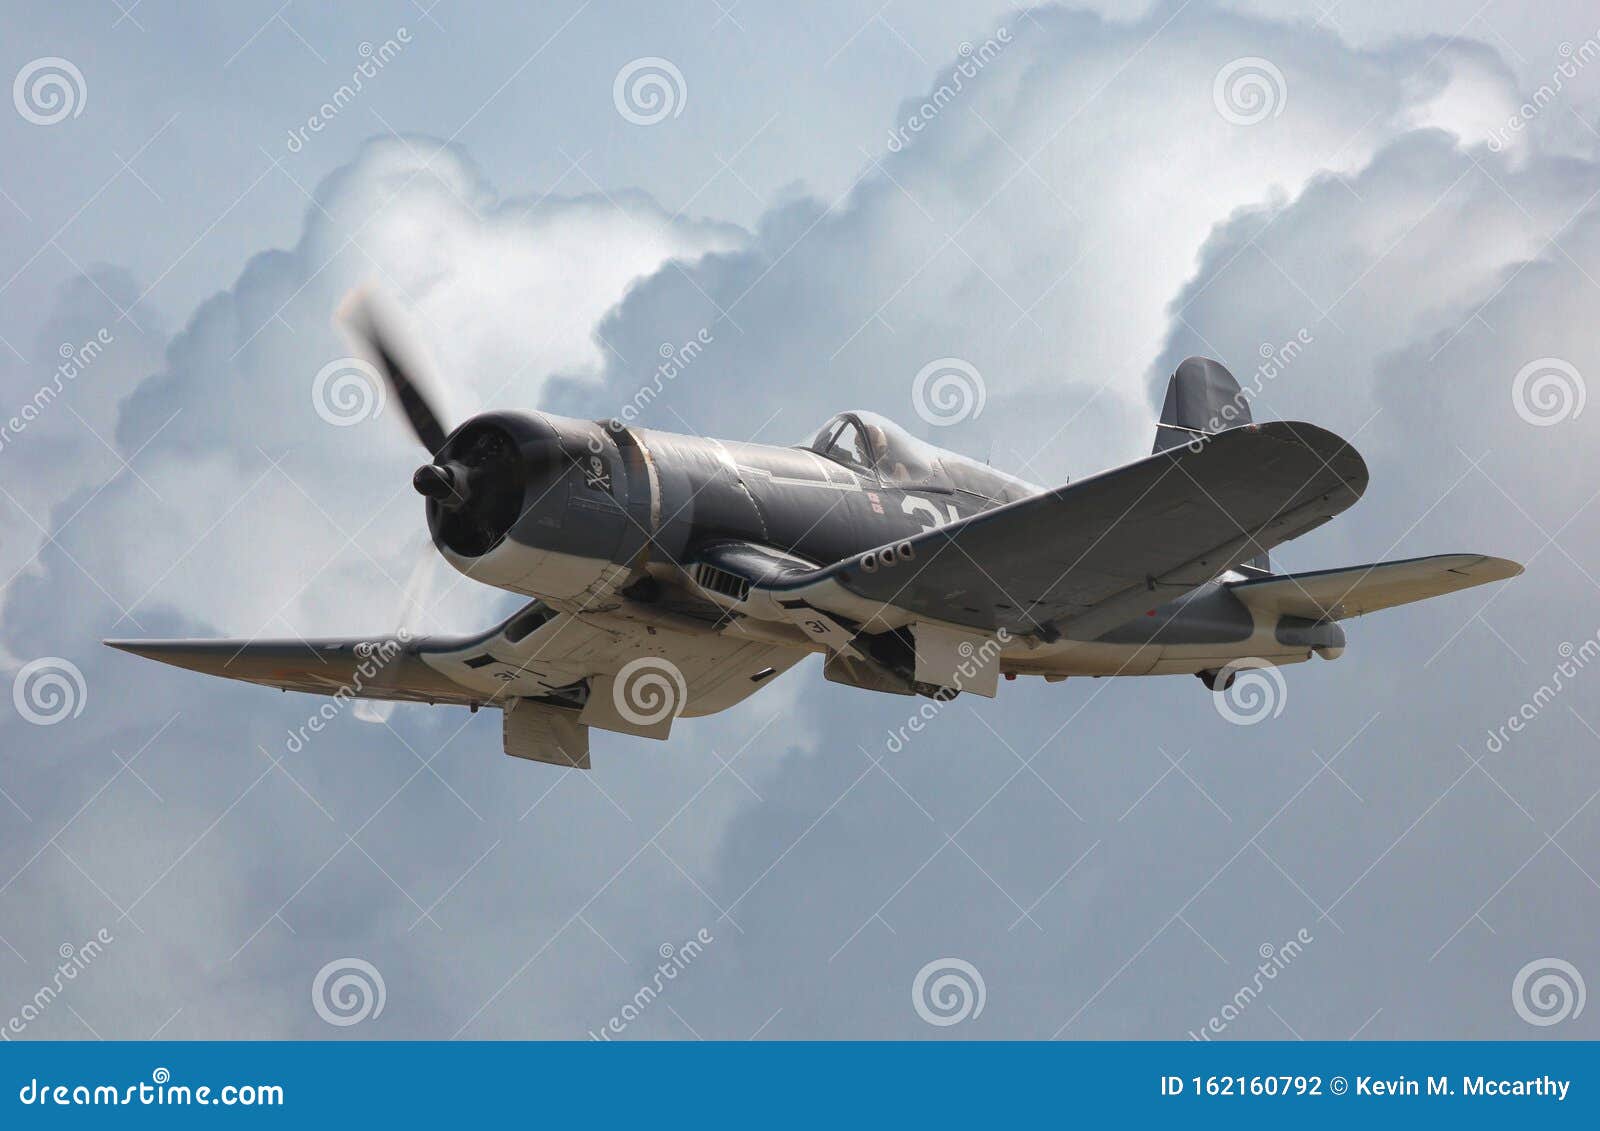 Vought F4U Corsair Pasa Por Nubes De Tormenta Fotografía editorial - Imagen  de nubes, transporte: 162160792